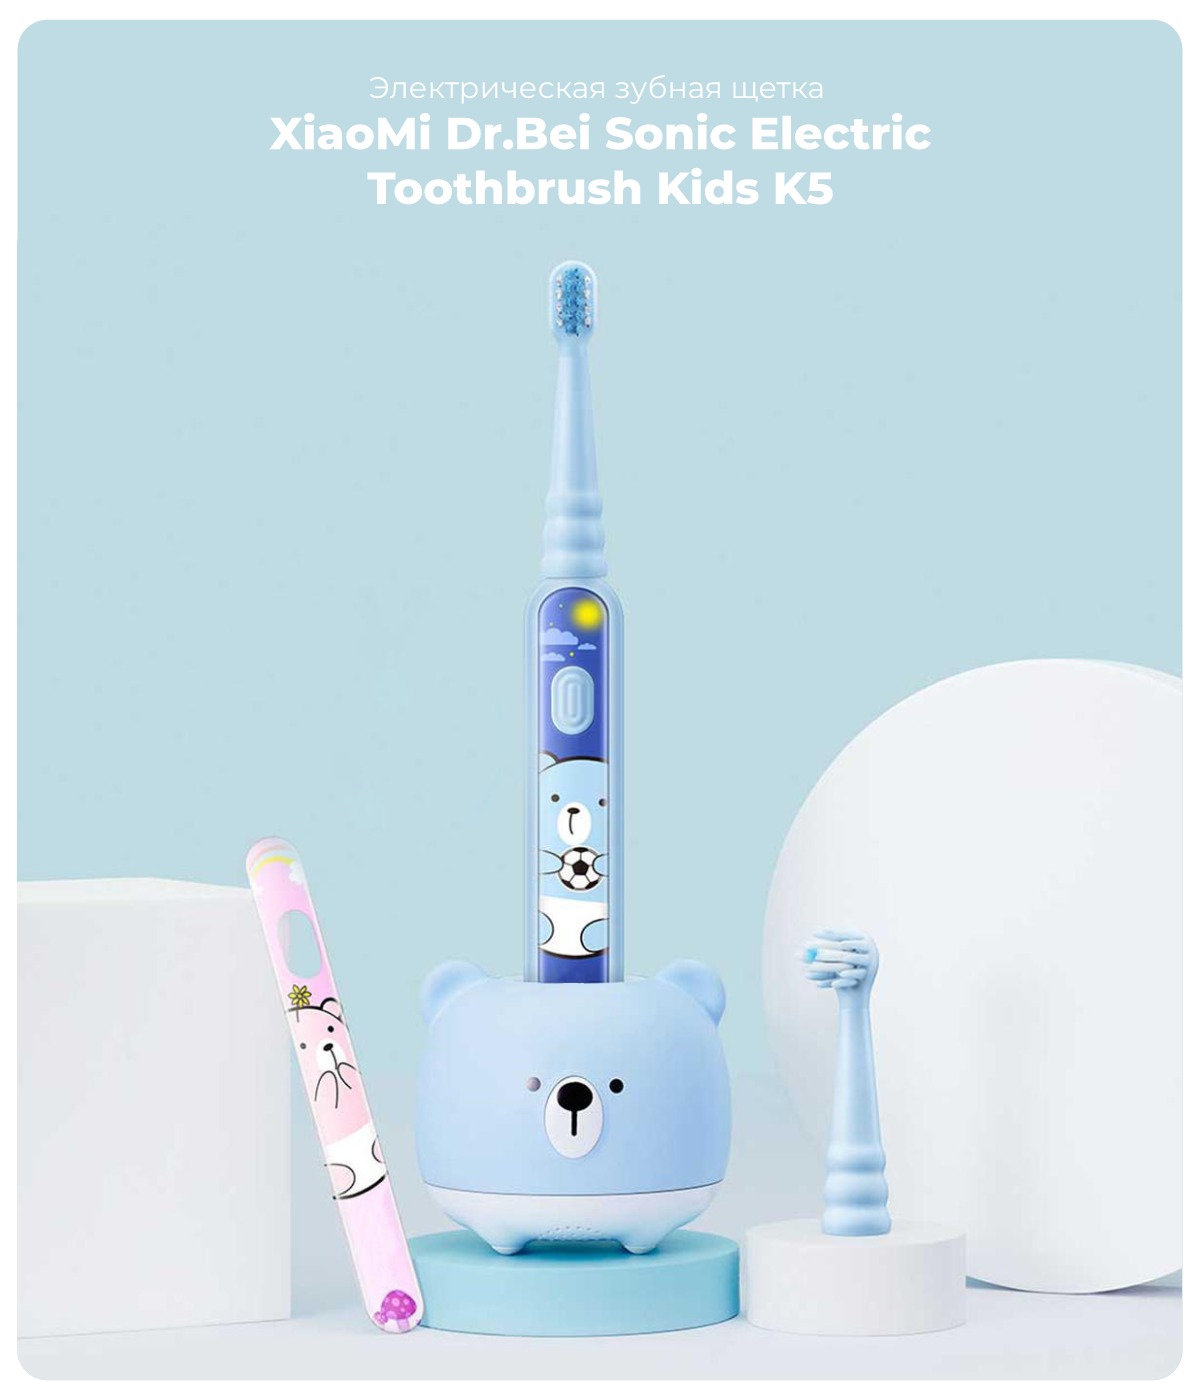 XiaoMi-DrBei-Sonic-Electric-Toothbrush-Kids-K5-01